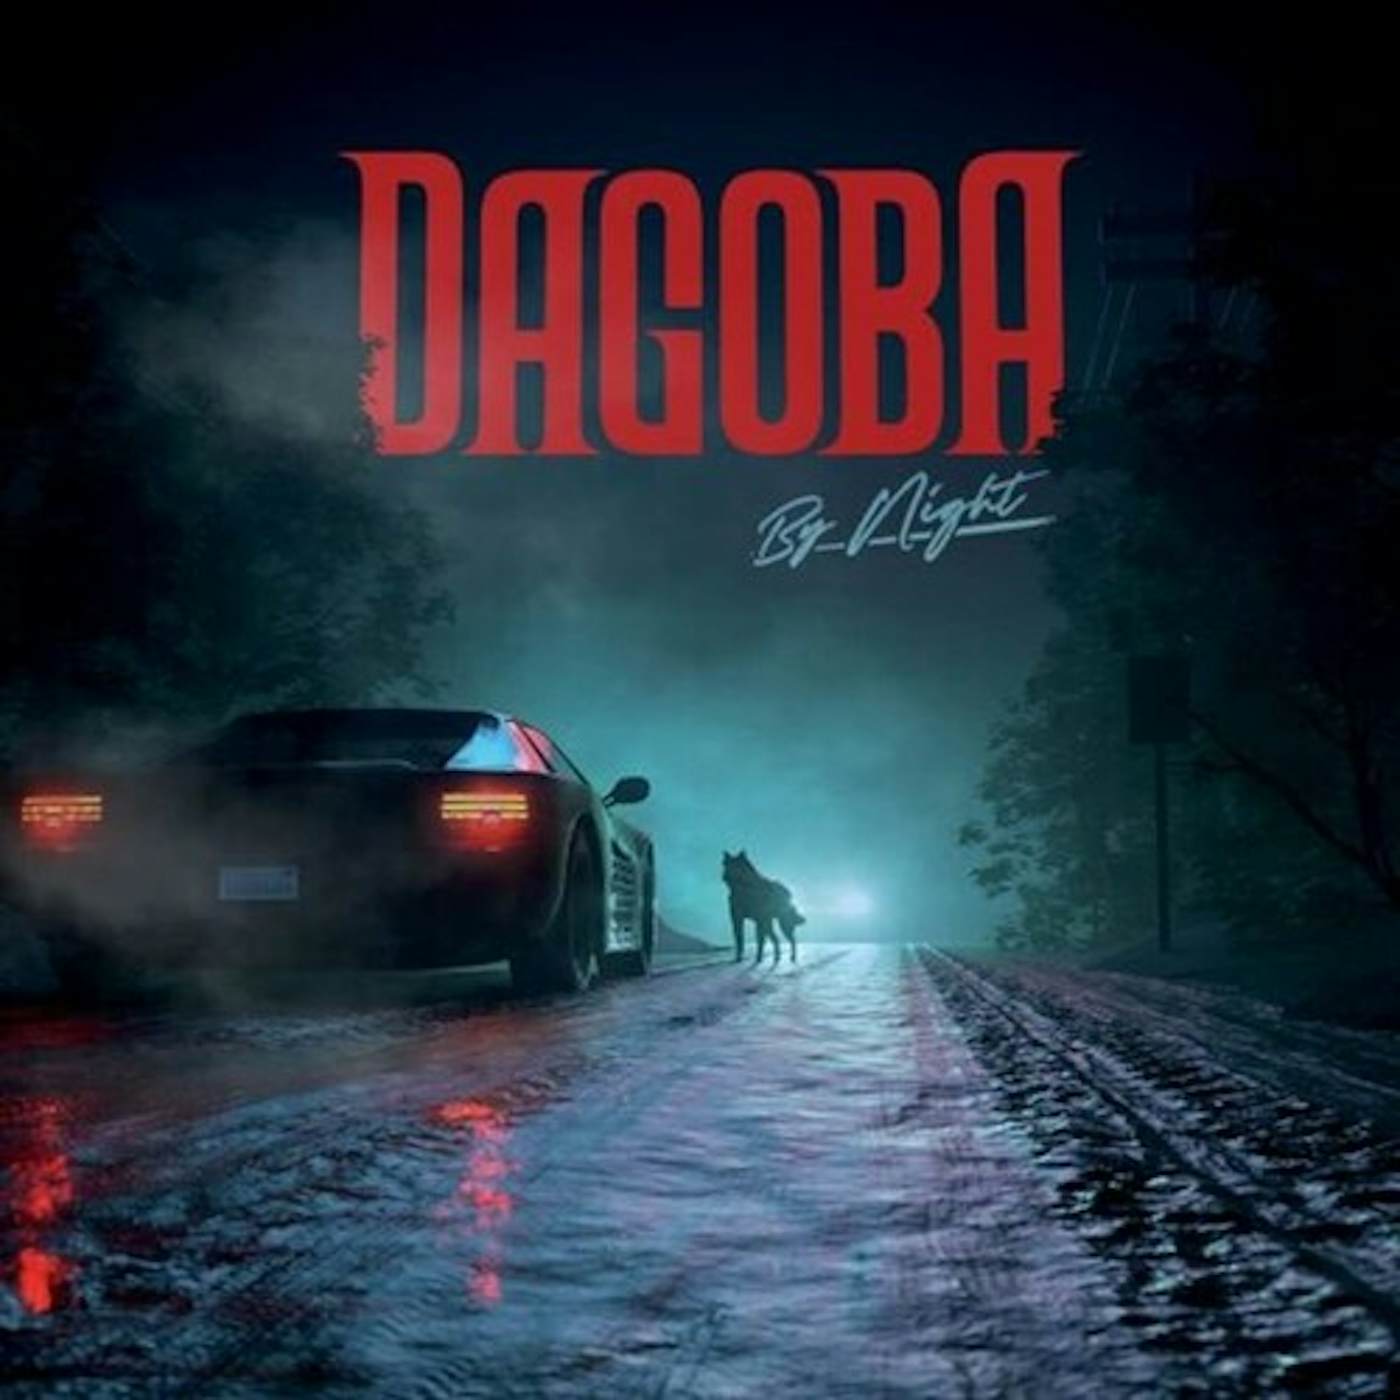 Dagoba BY NIGHT CD